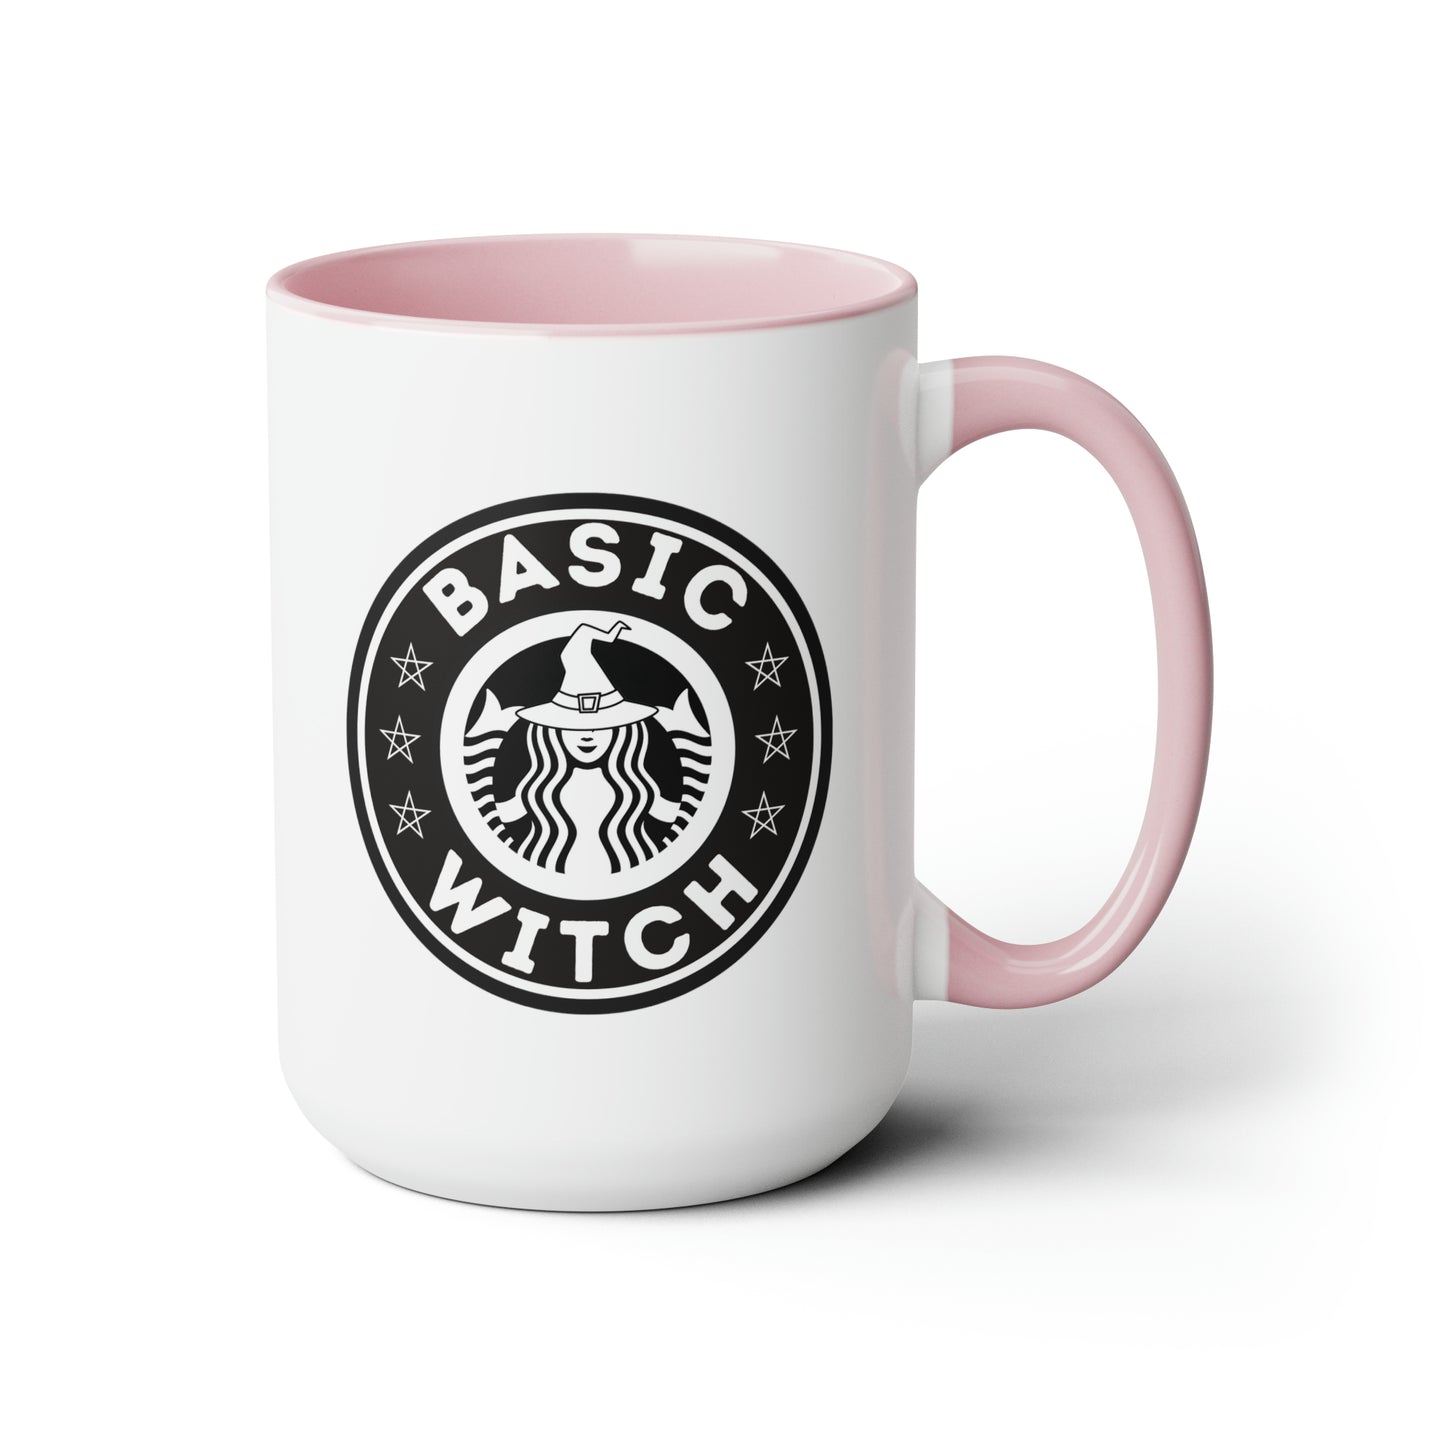 Two-Tone Coffee Mugs, 15oz - Basic Witch